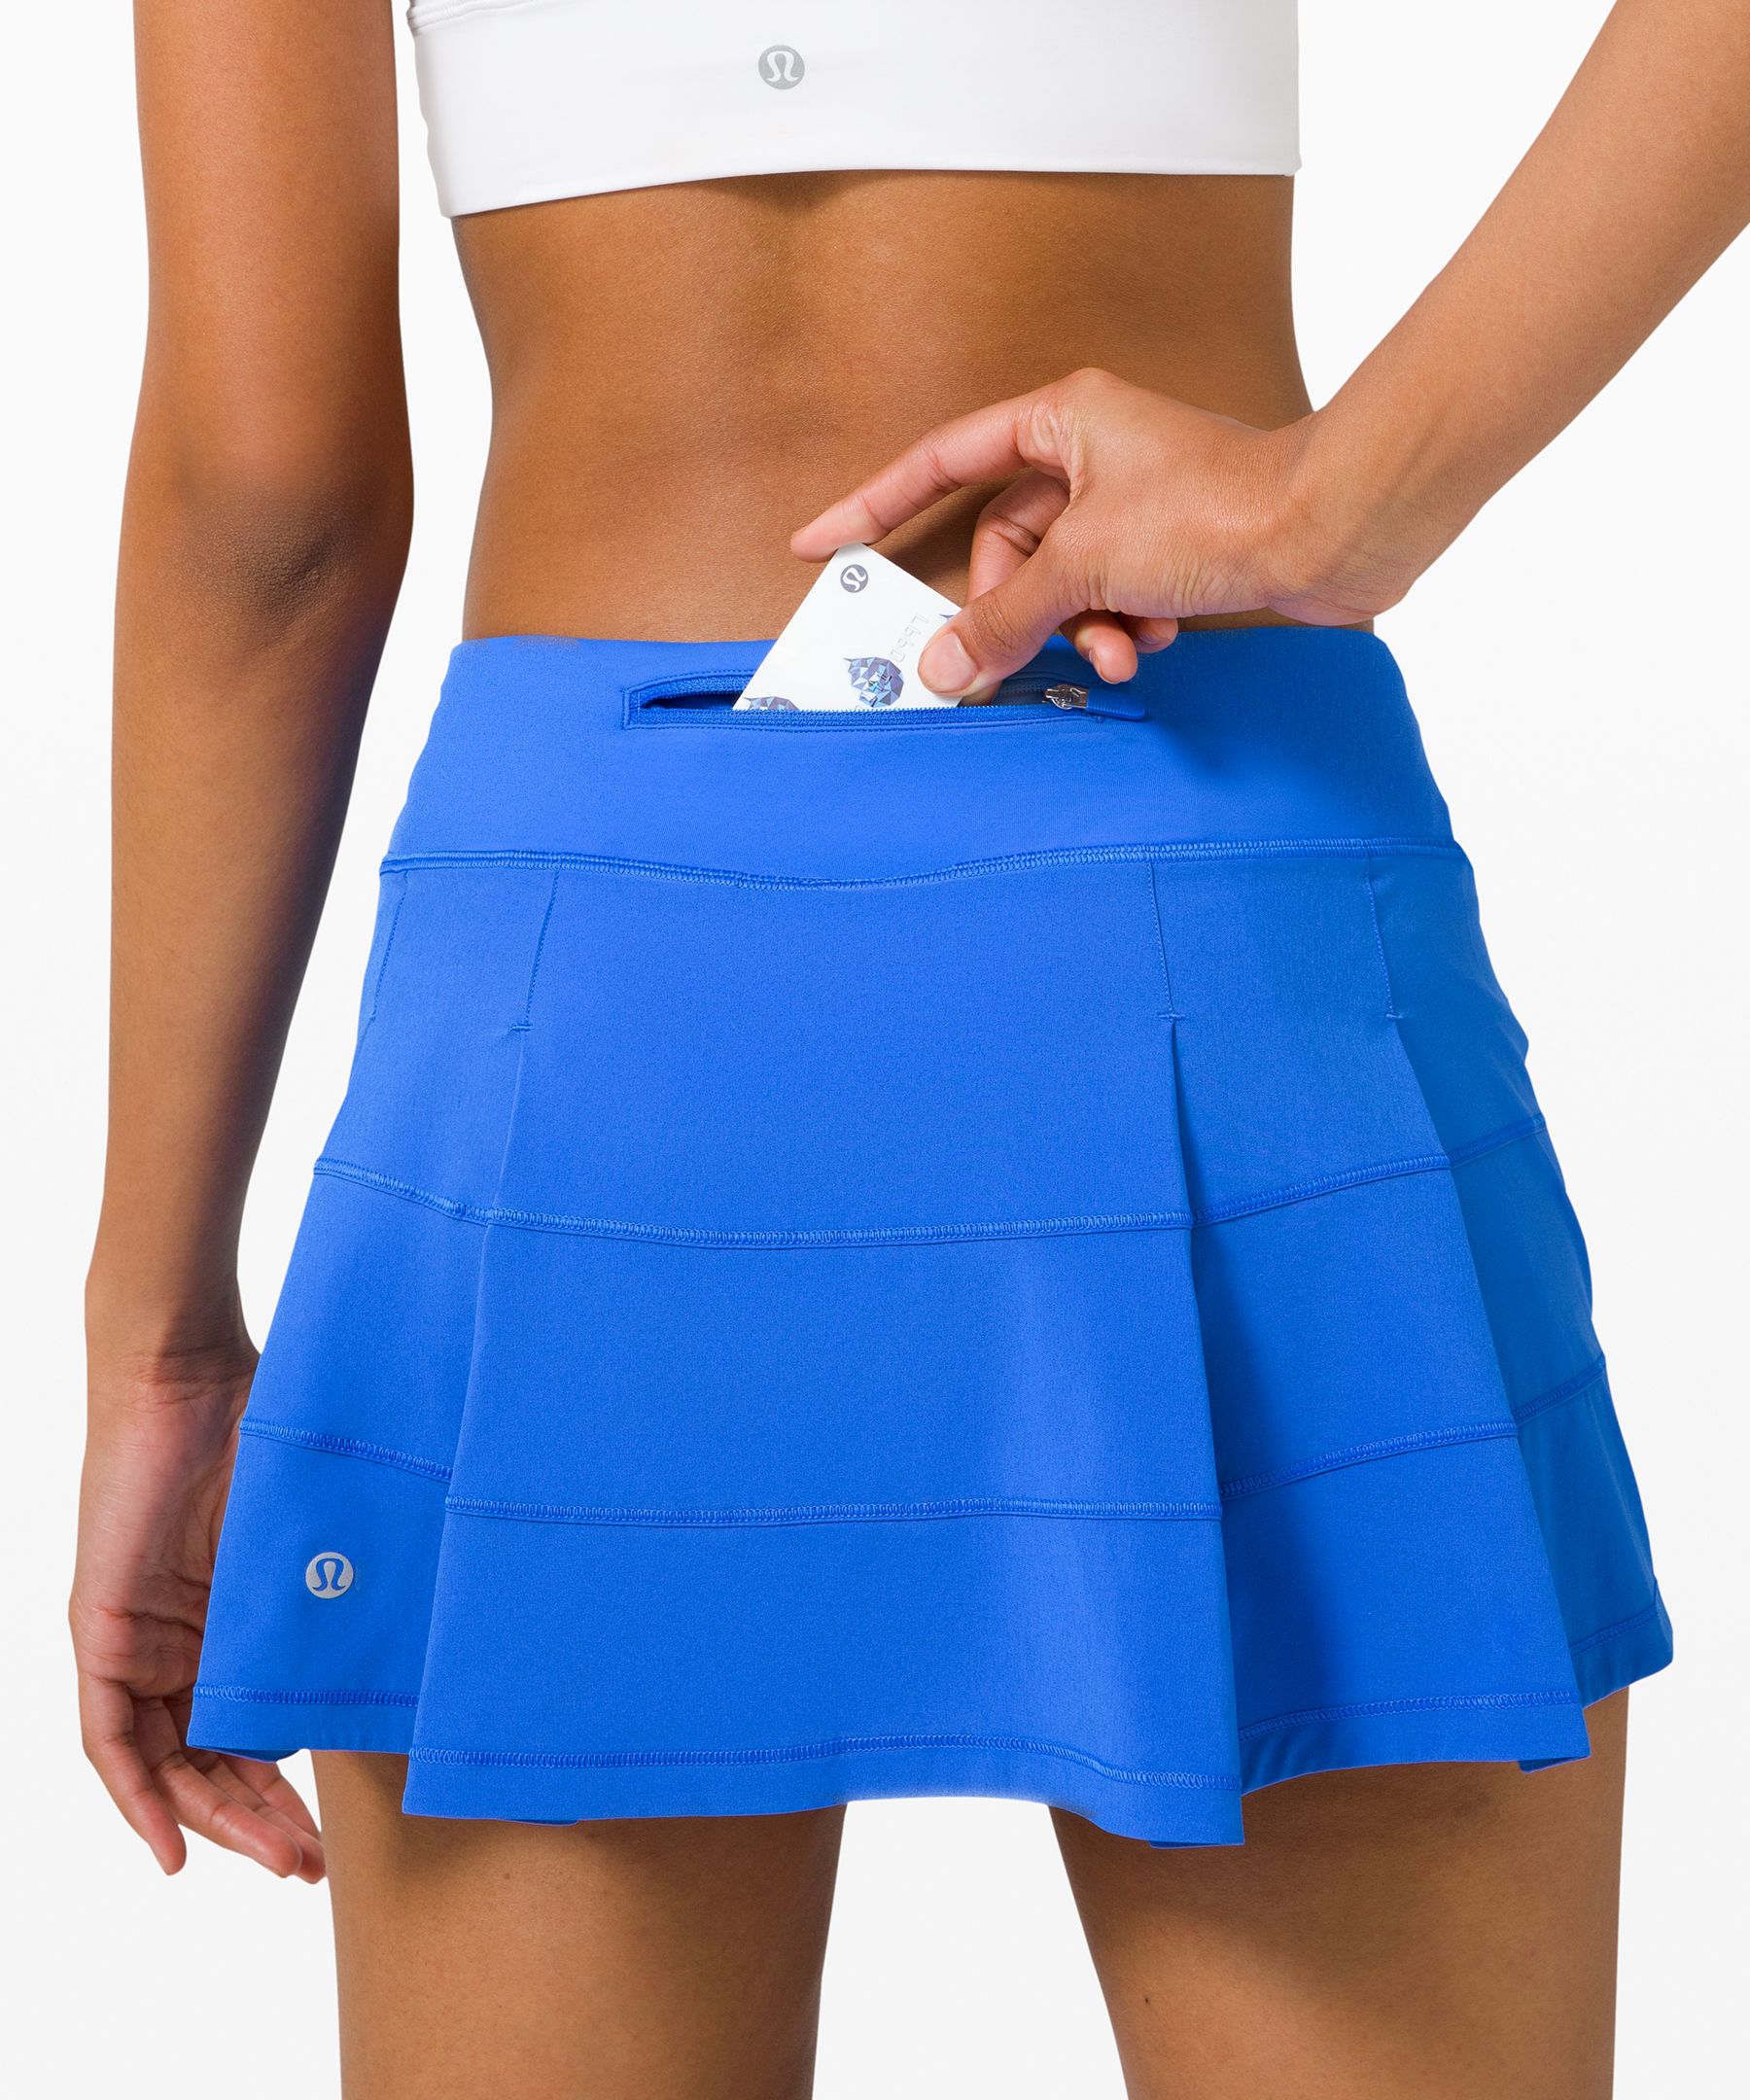 lululemon skirt size 6